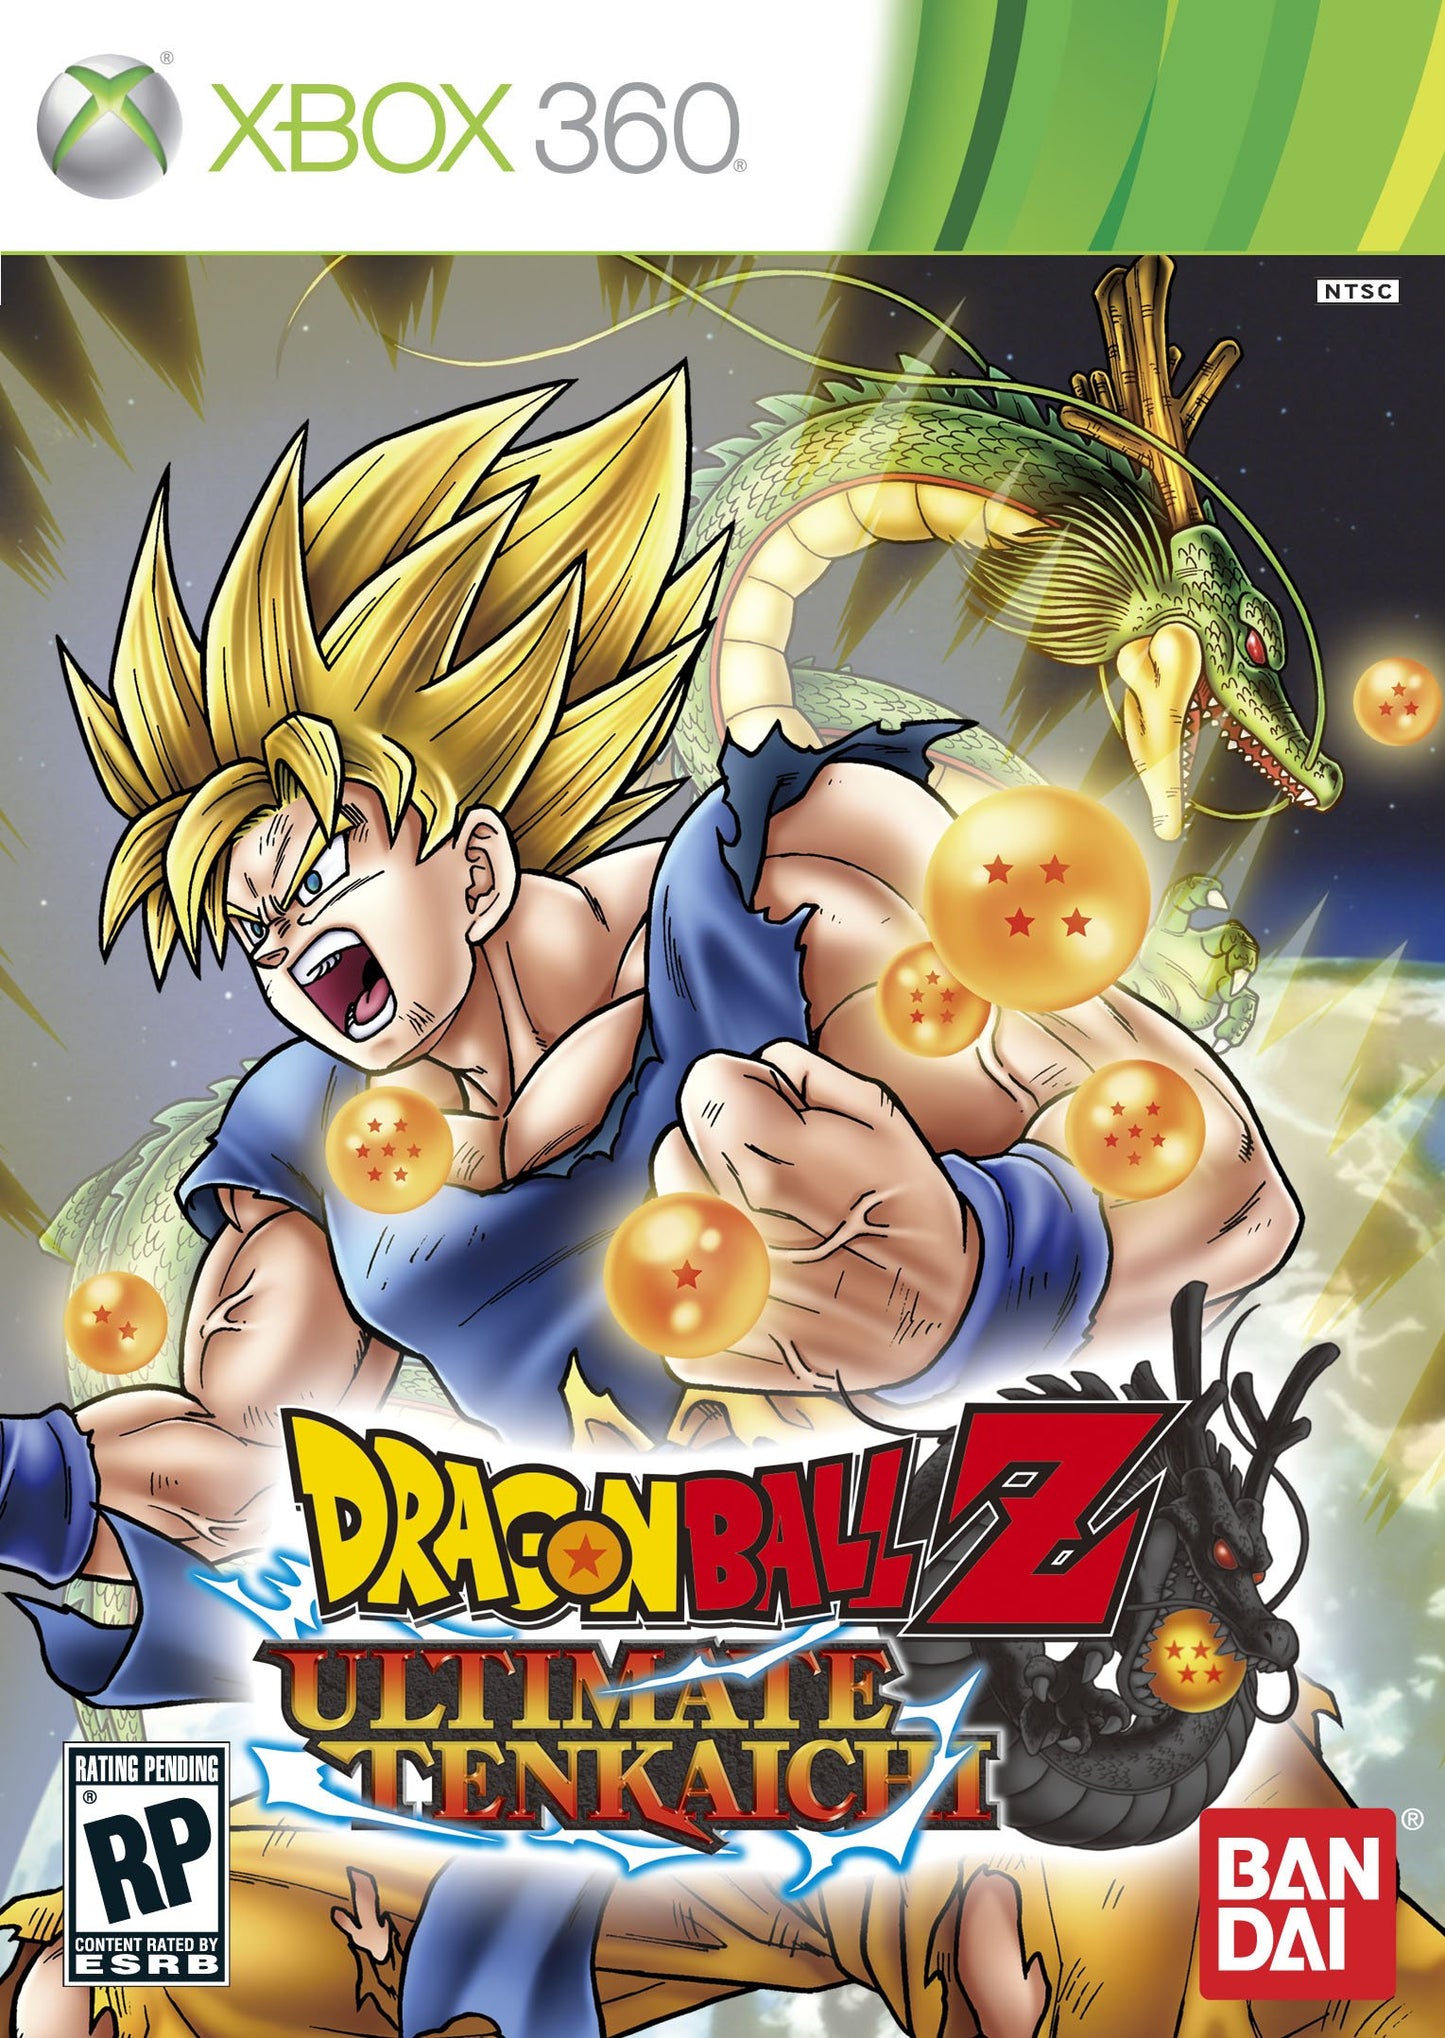 Dragon Ball Z: Ultimate Tenkaichi - Xbox 360